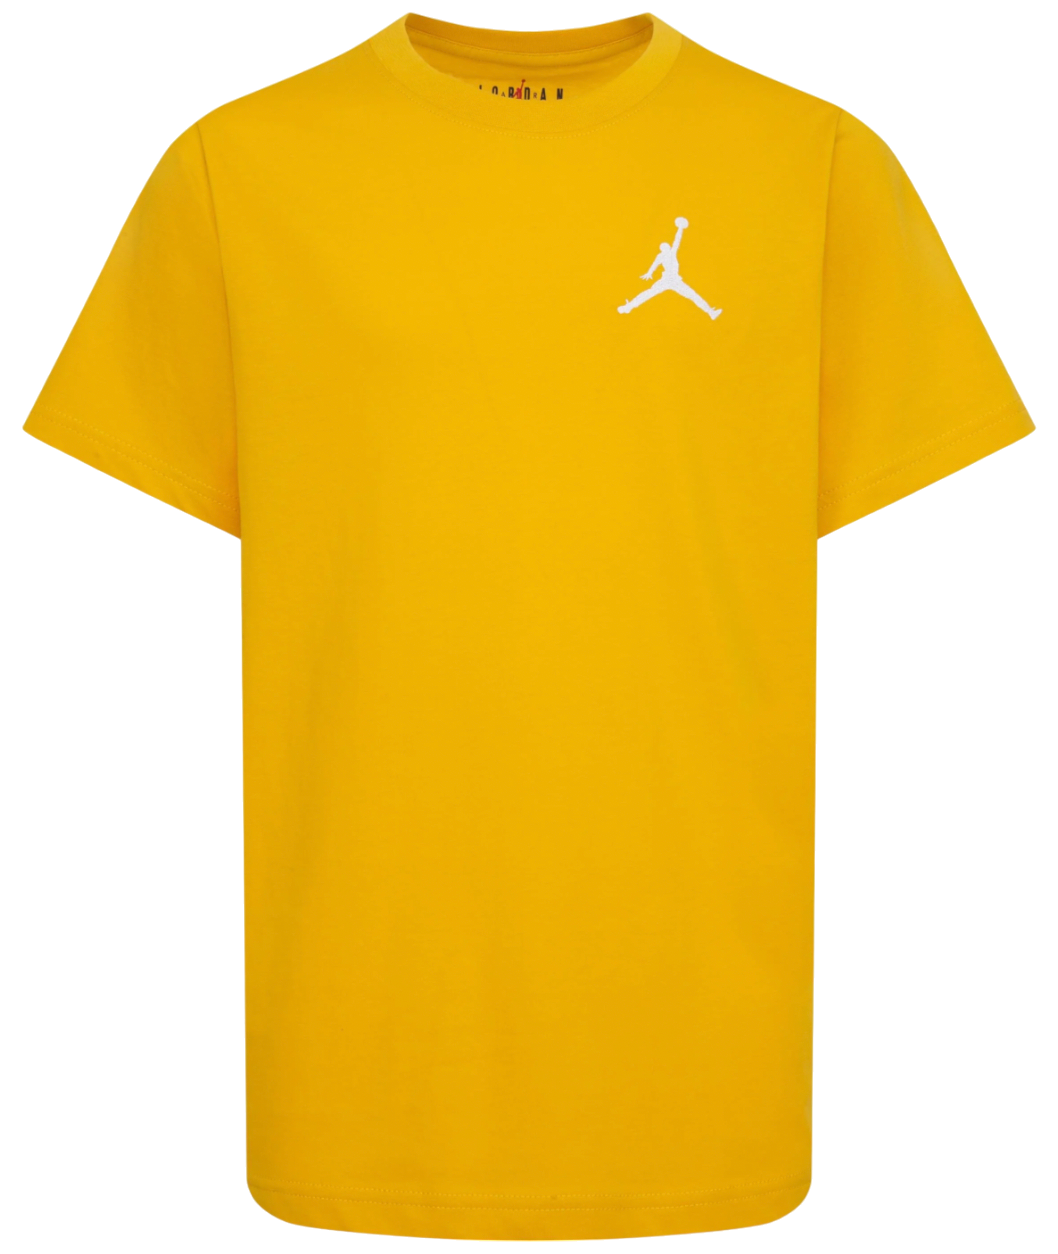 Jordan Jumpman Air T-Shirt Kids